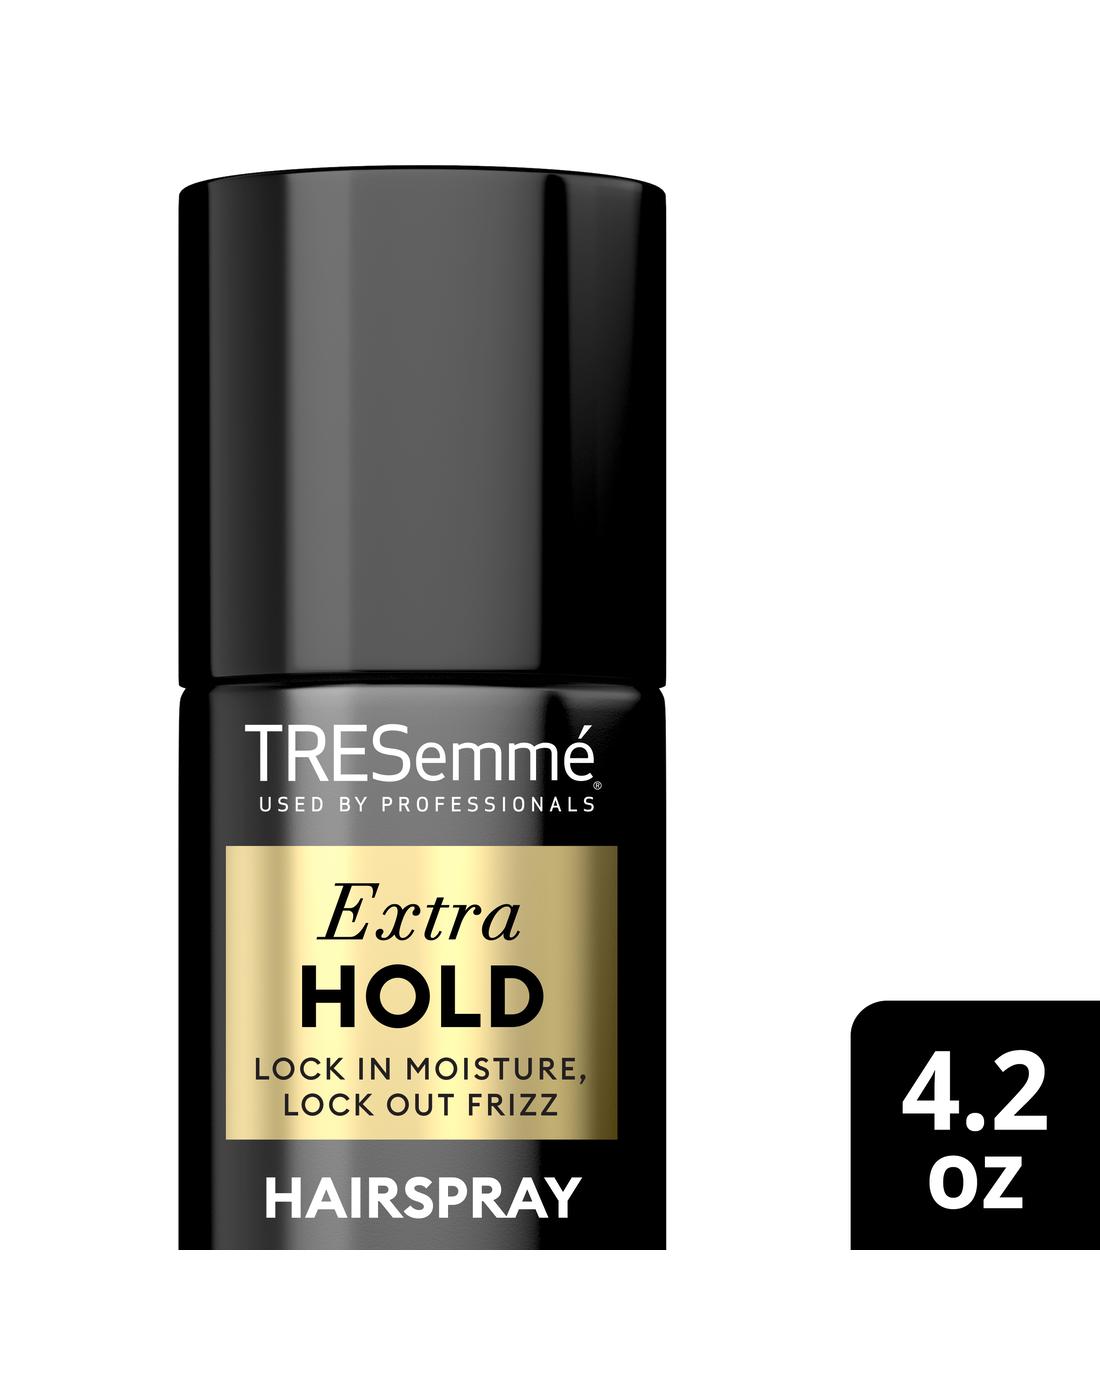 TRESemmé Extra Hold Hairspray; image 2 of 5